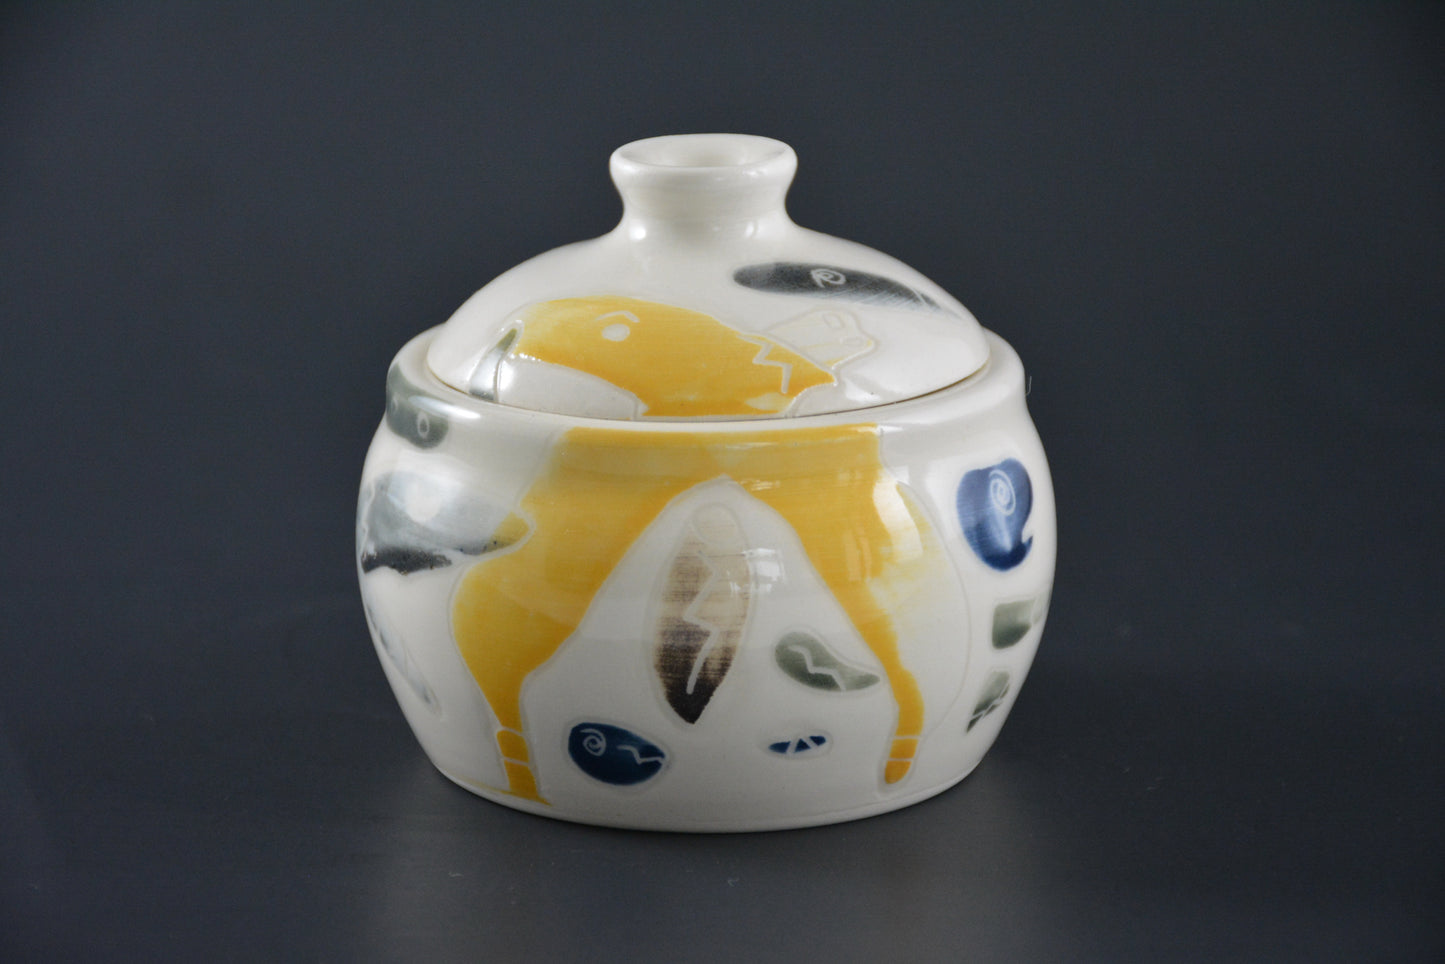 PSM-04 Ceramic Sea salt pot - Porcelain sea salt pot